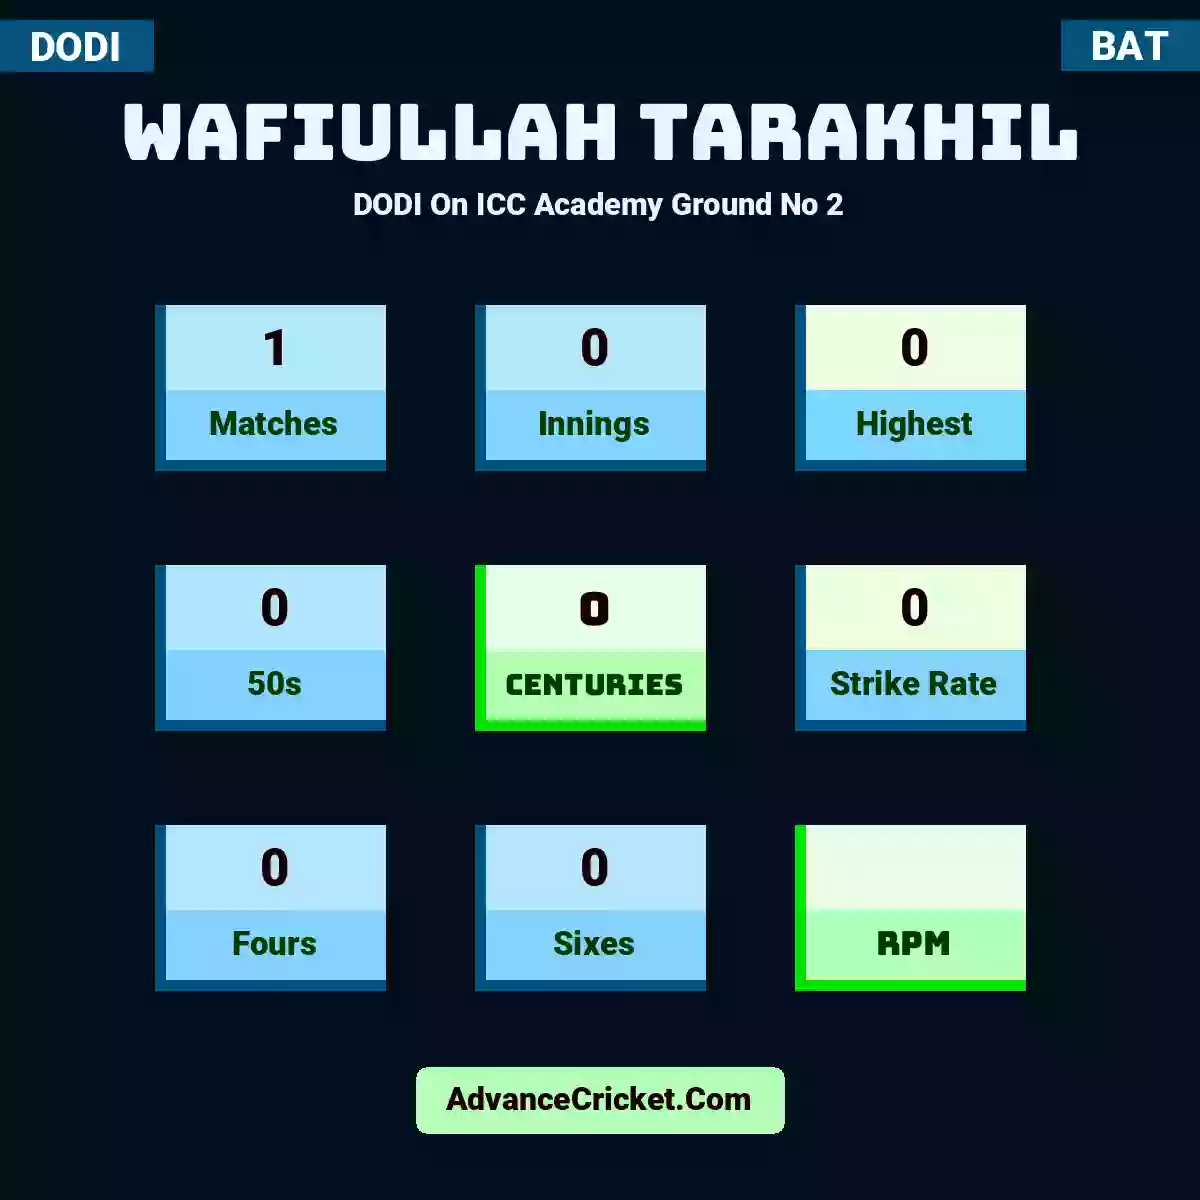 Wafiullah Tarakhil DODI  On ICC Academy Ground No 2, Wafiullah Tarakhil played 1 matches, scored 0 runs as highest, 0 half-centuries, and 0 centuries, with a strike rate of 0. W.Tarakhil hit 0 fours and 0 sixes.